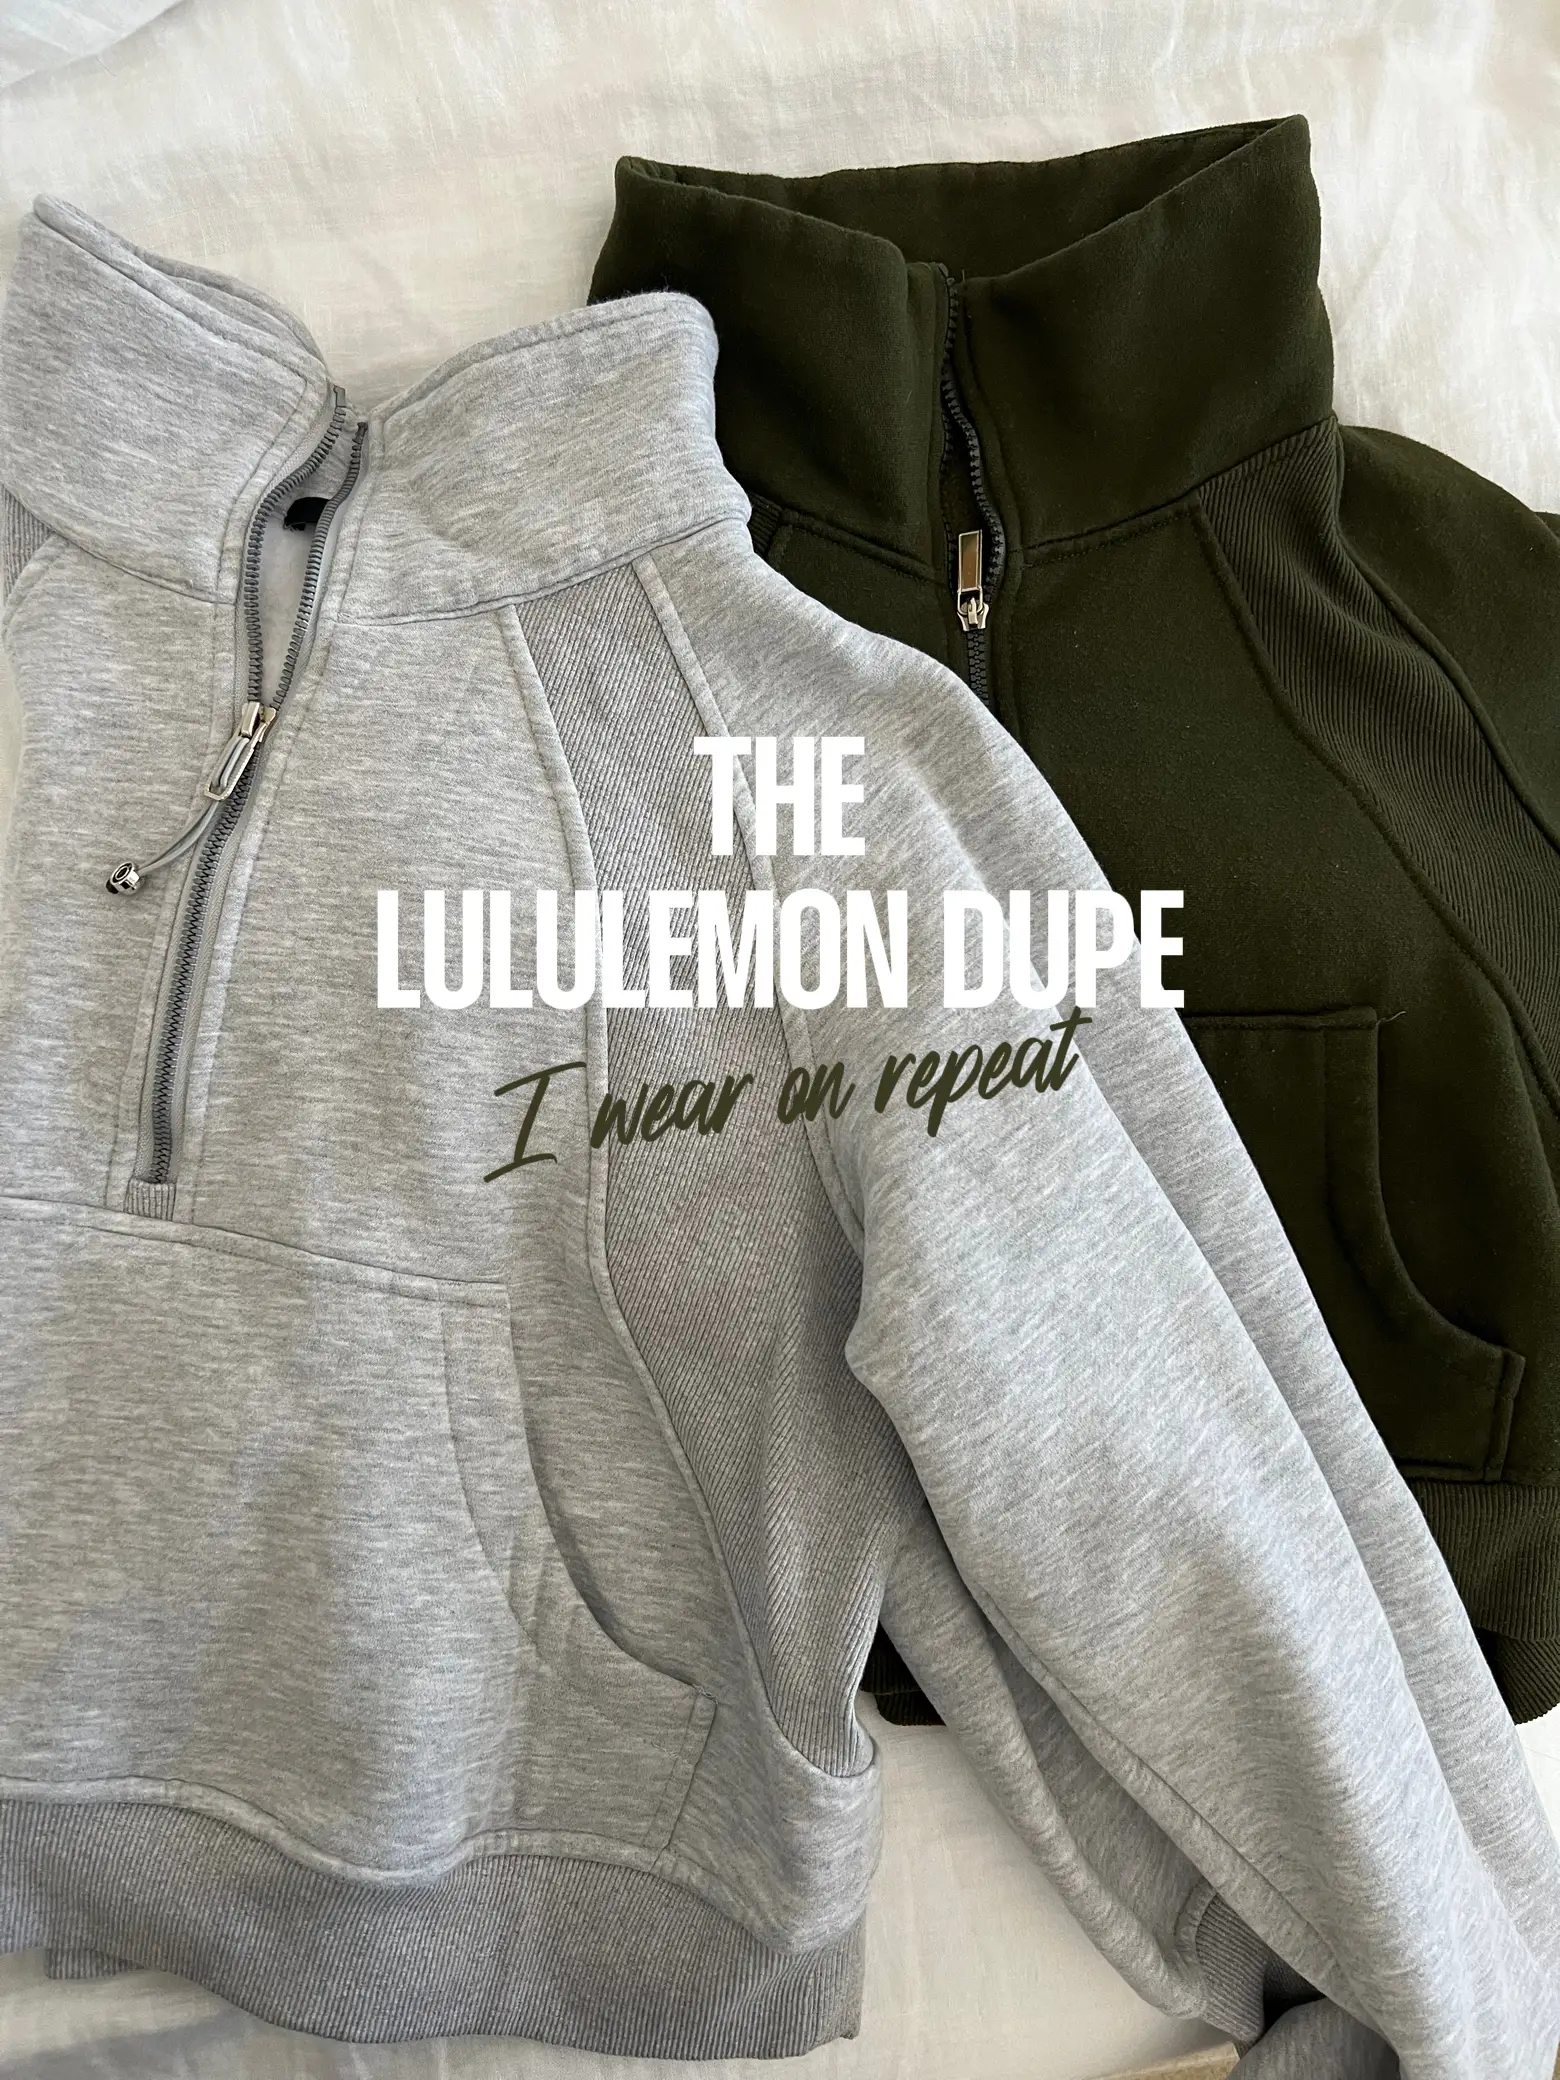 Lululemon In Stride jacket in incognito camo multi - Depop